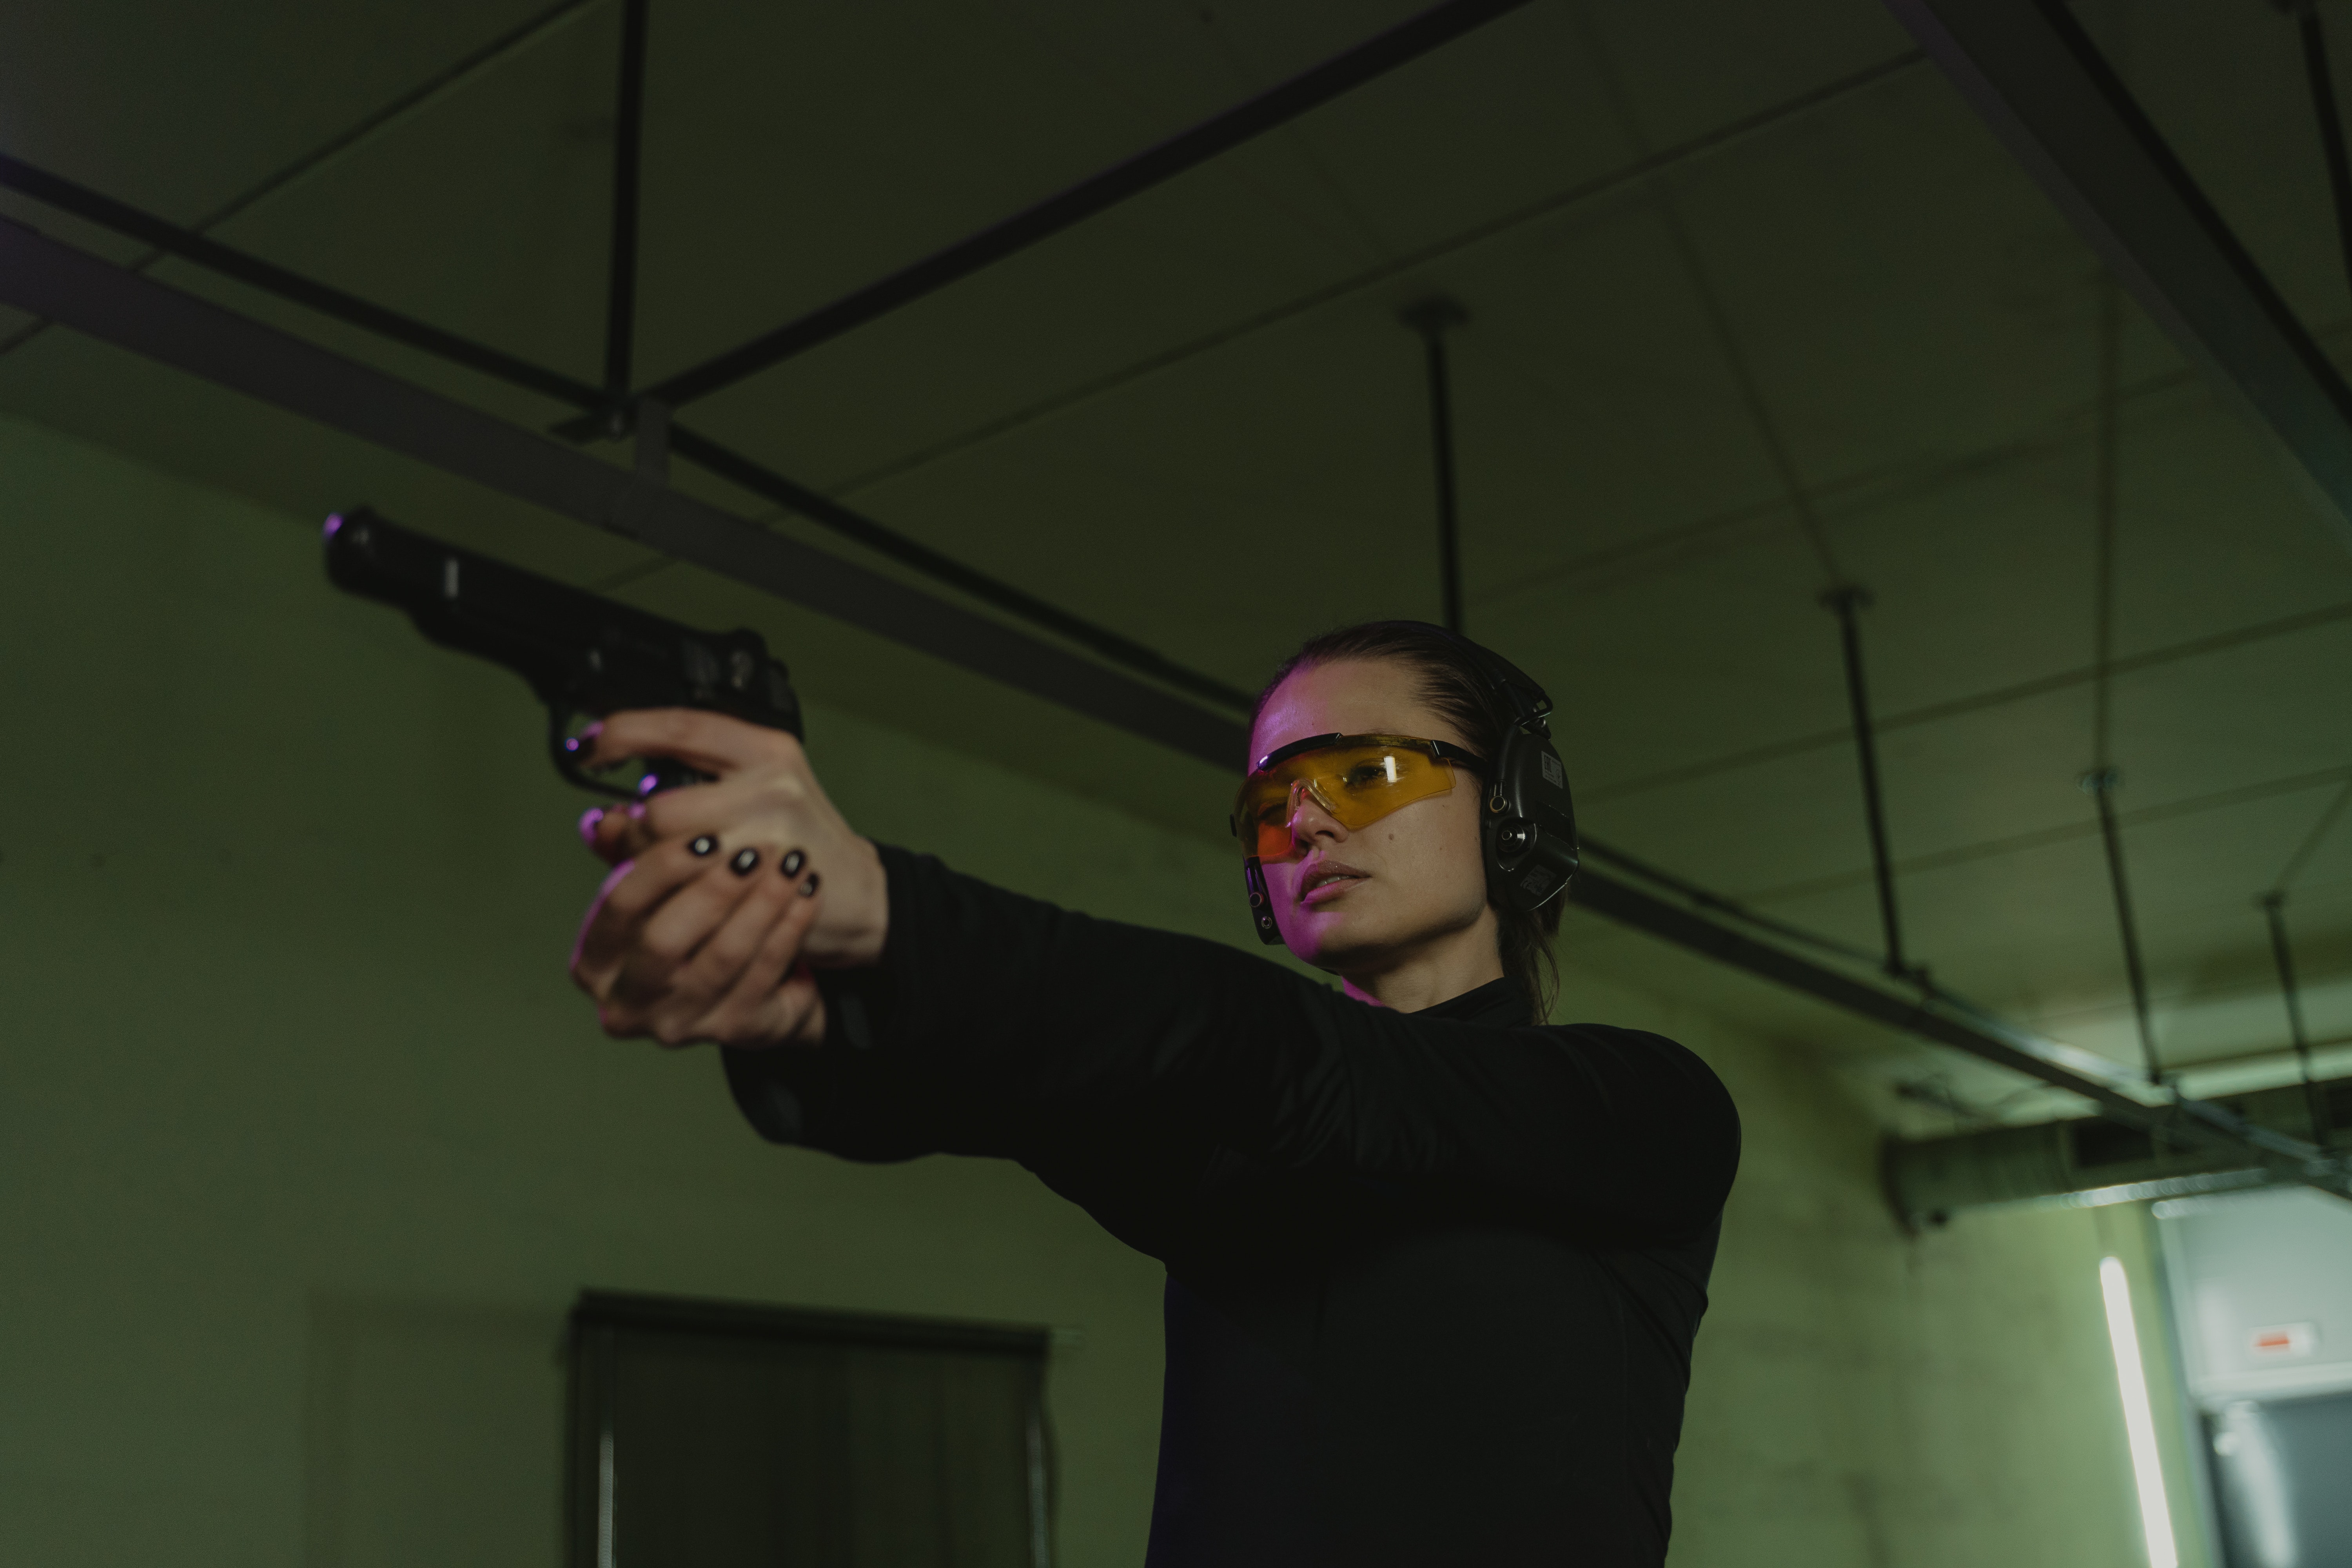 A woman aiming a pistol